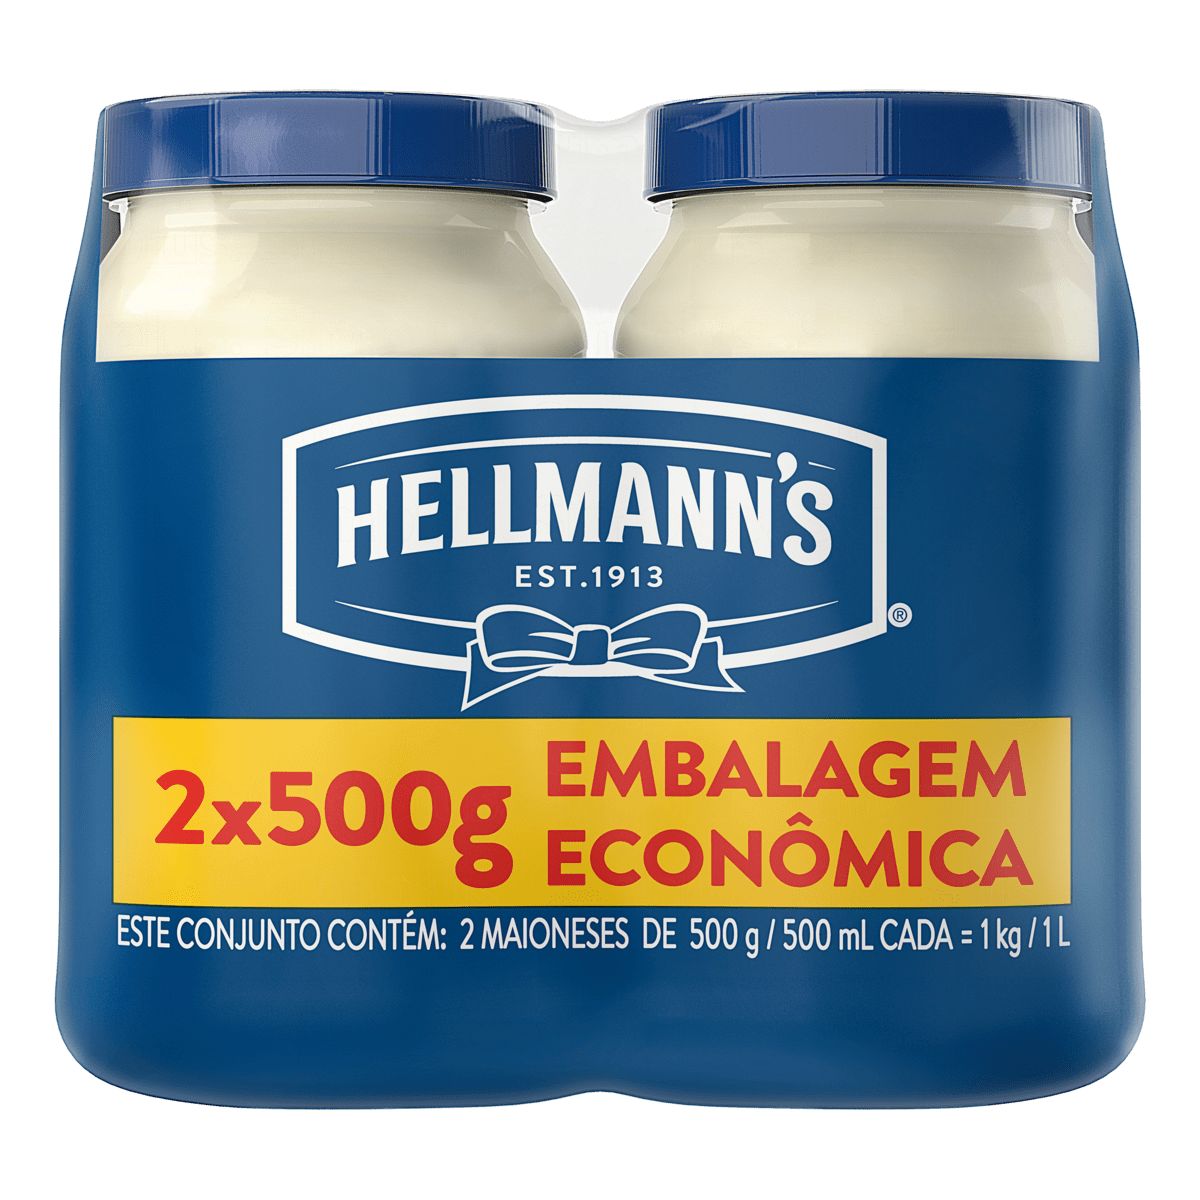 Maionese Hellmann's Pote 1kg Pack 2 Unidades Embalagem Econômica